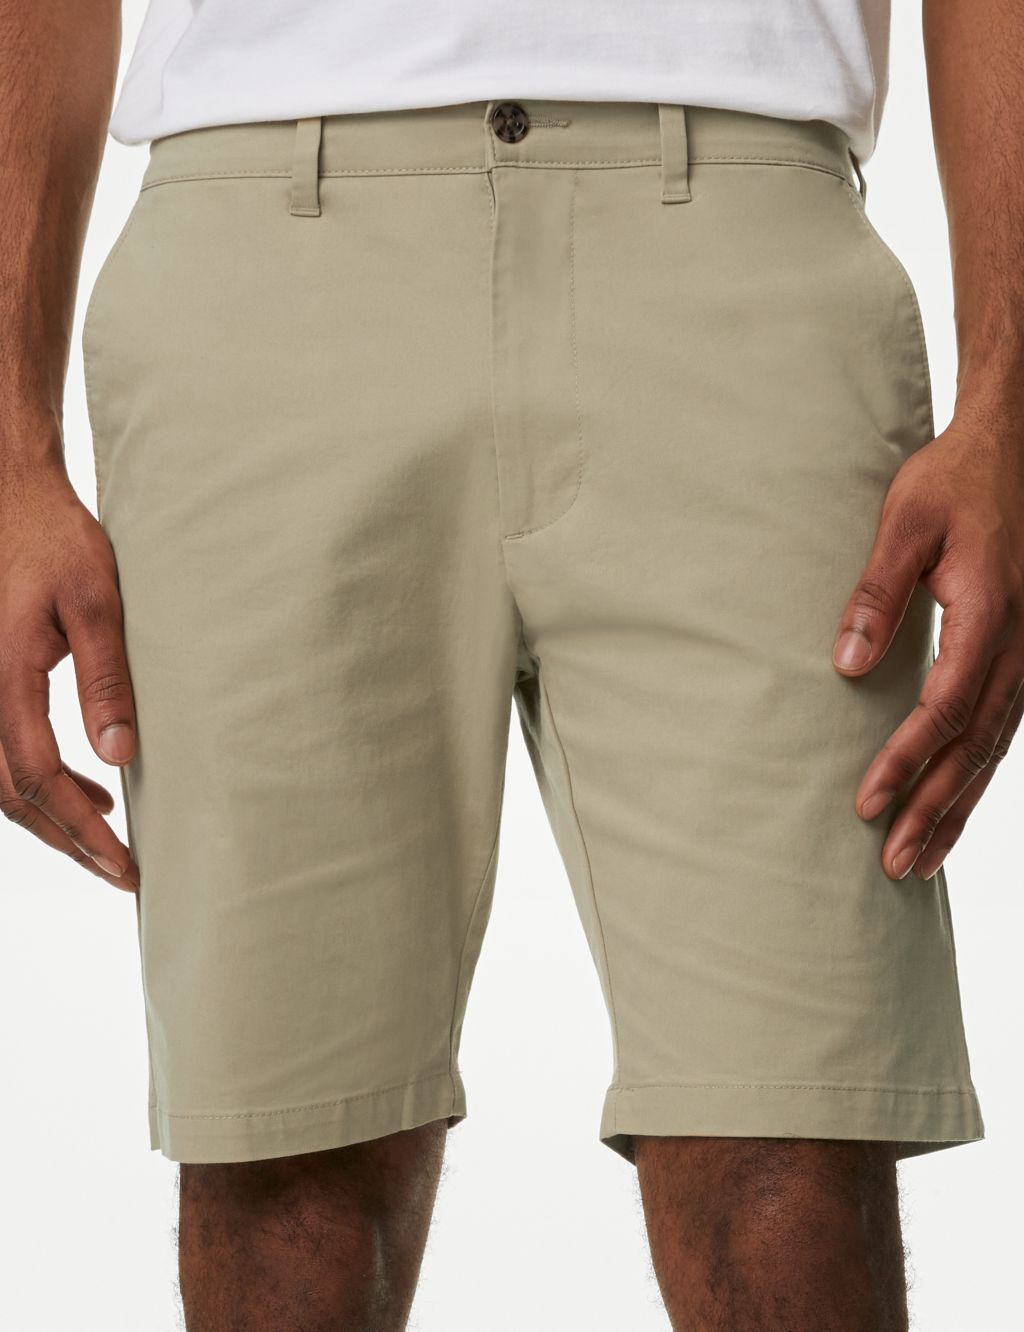 Men's Brown Shorts